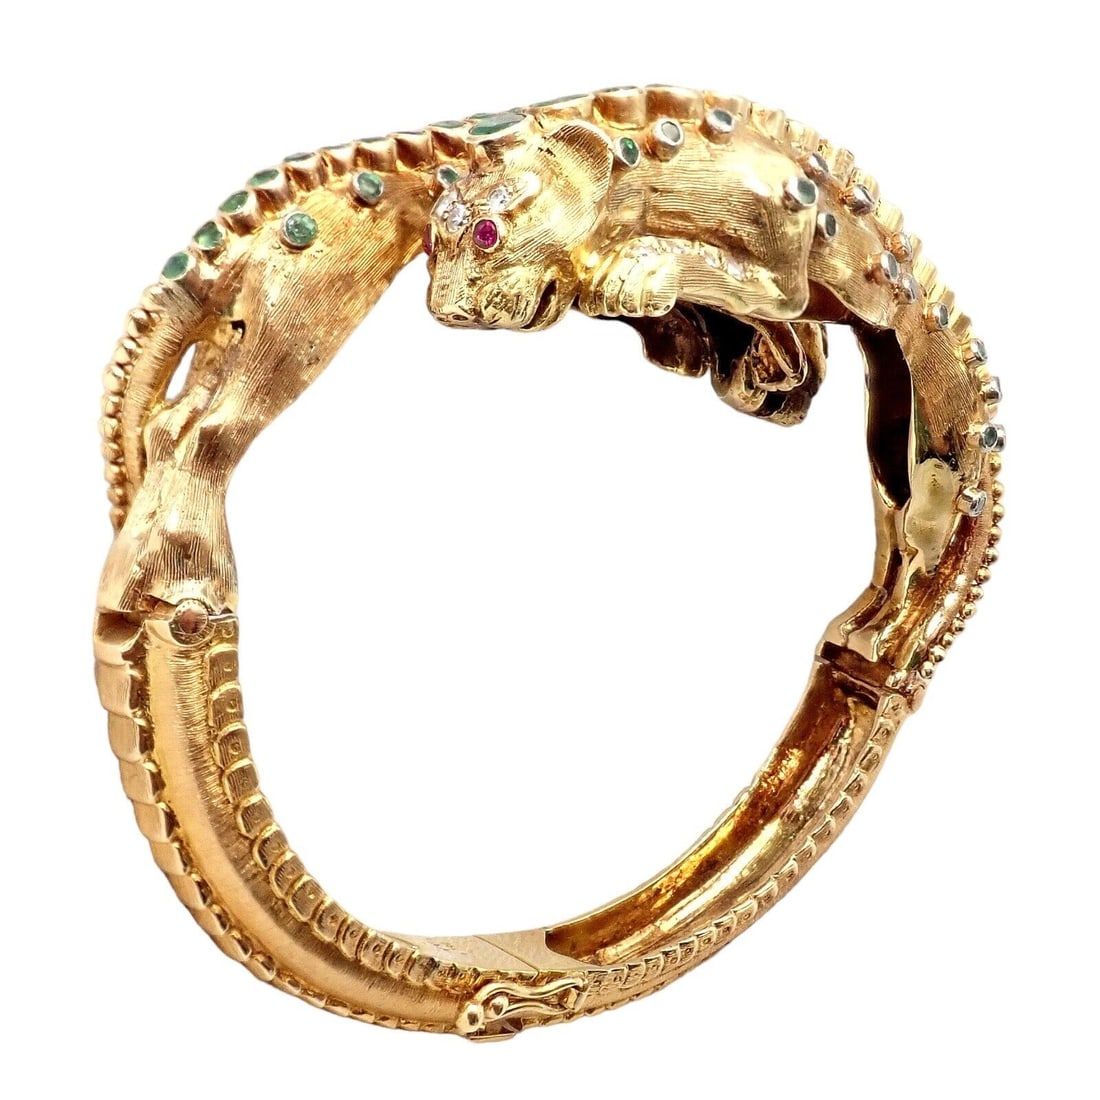 Ilias Lalaounis 18K gold, emerald, ruby, and diamond lioness bangle bracelet, estimated at $16,000-$19,000 at Jasper52.